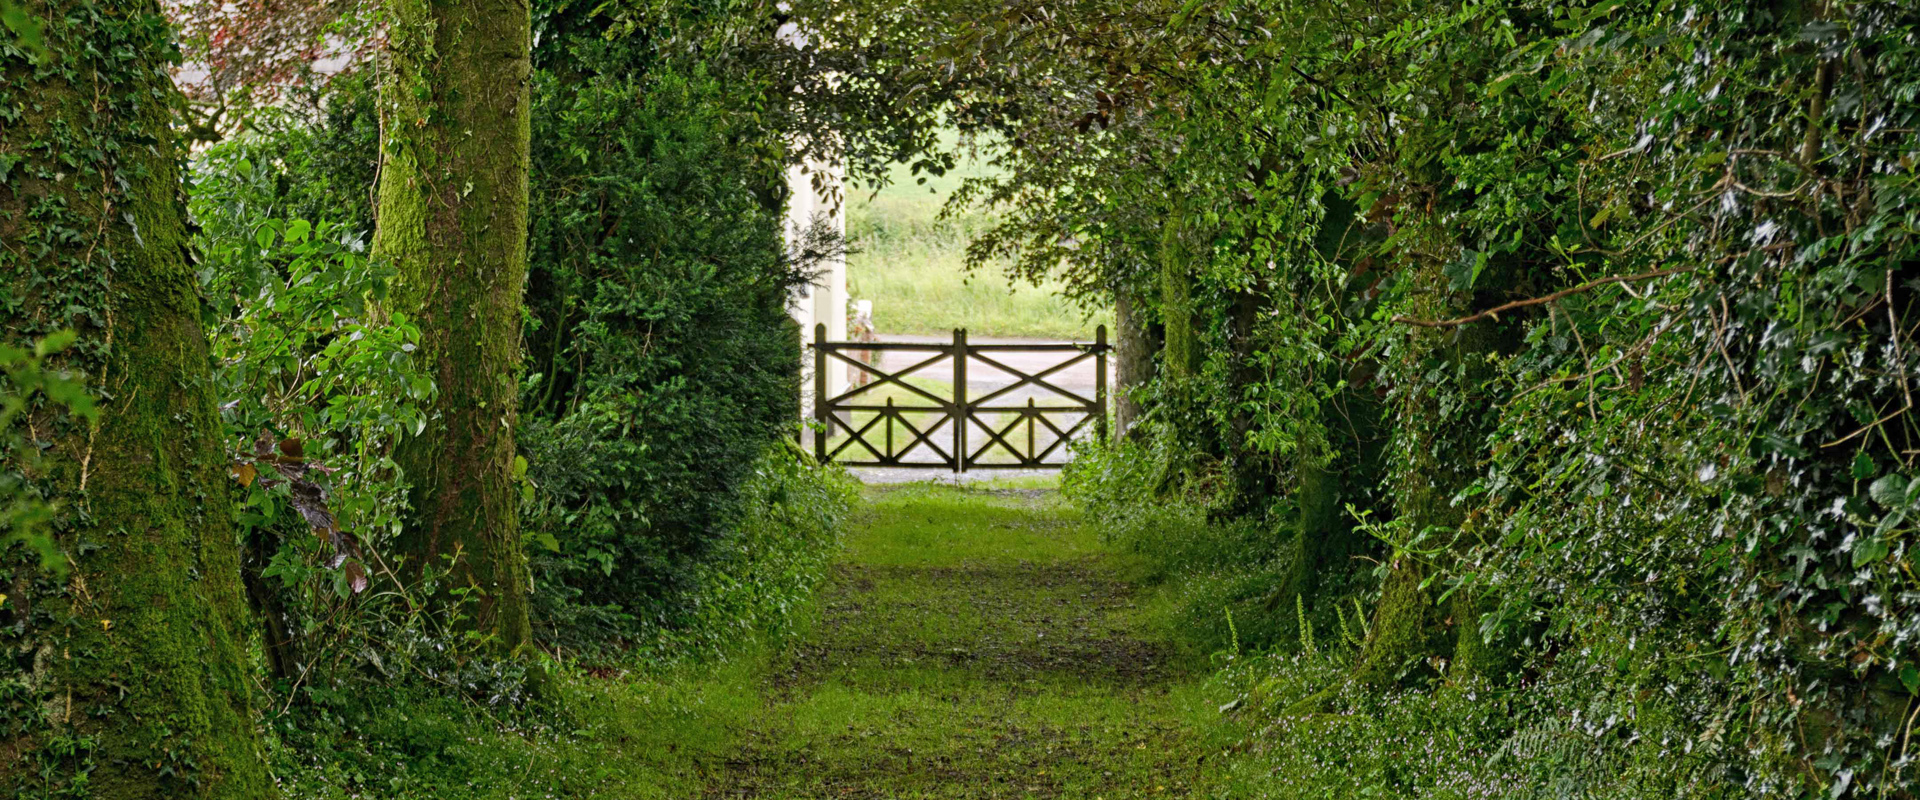 Path from Inwardleigh Church